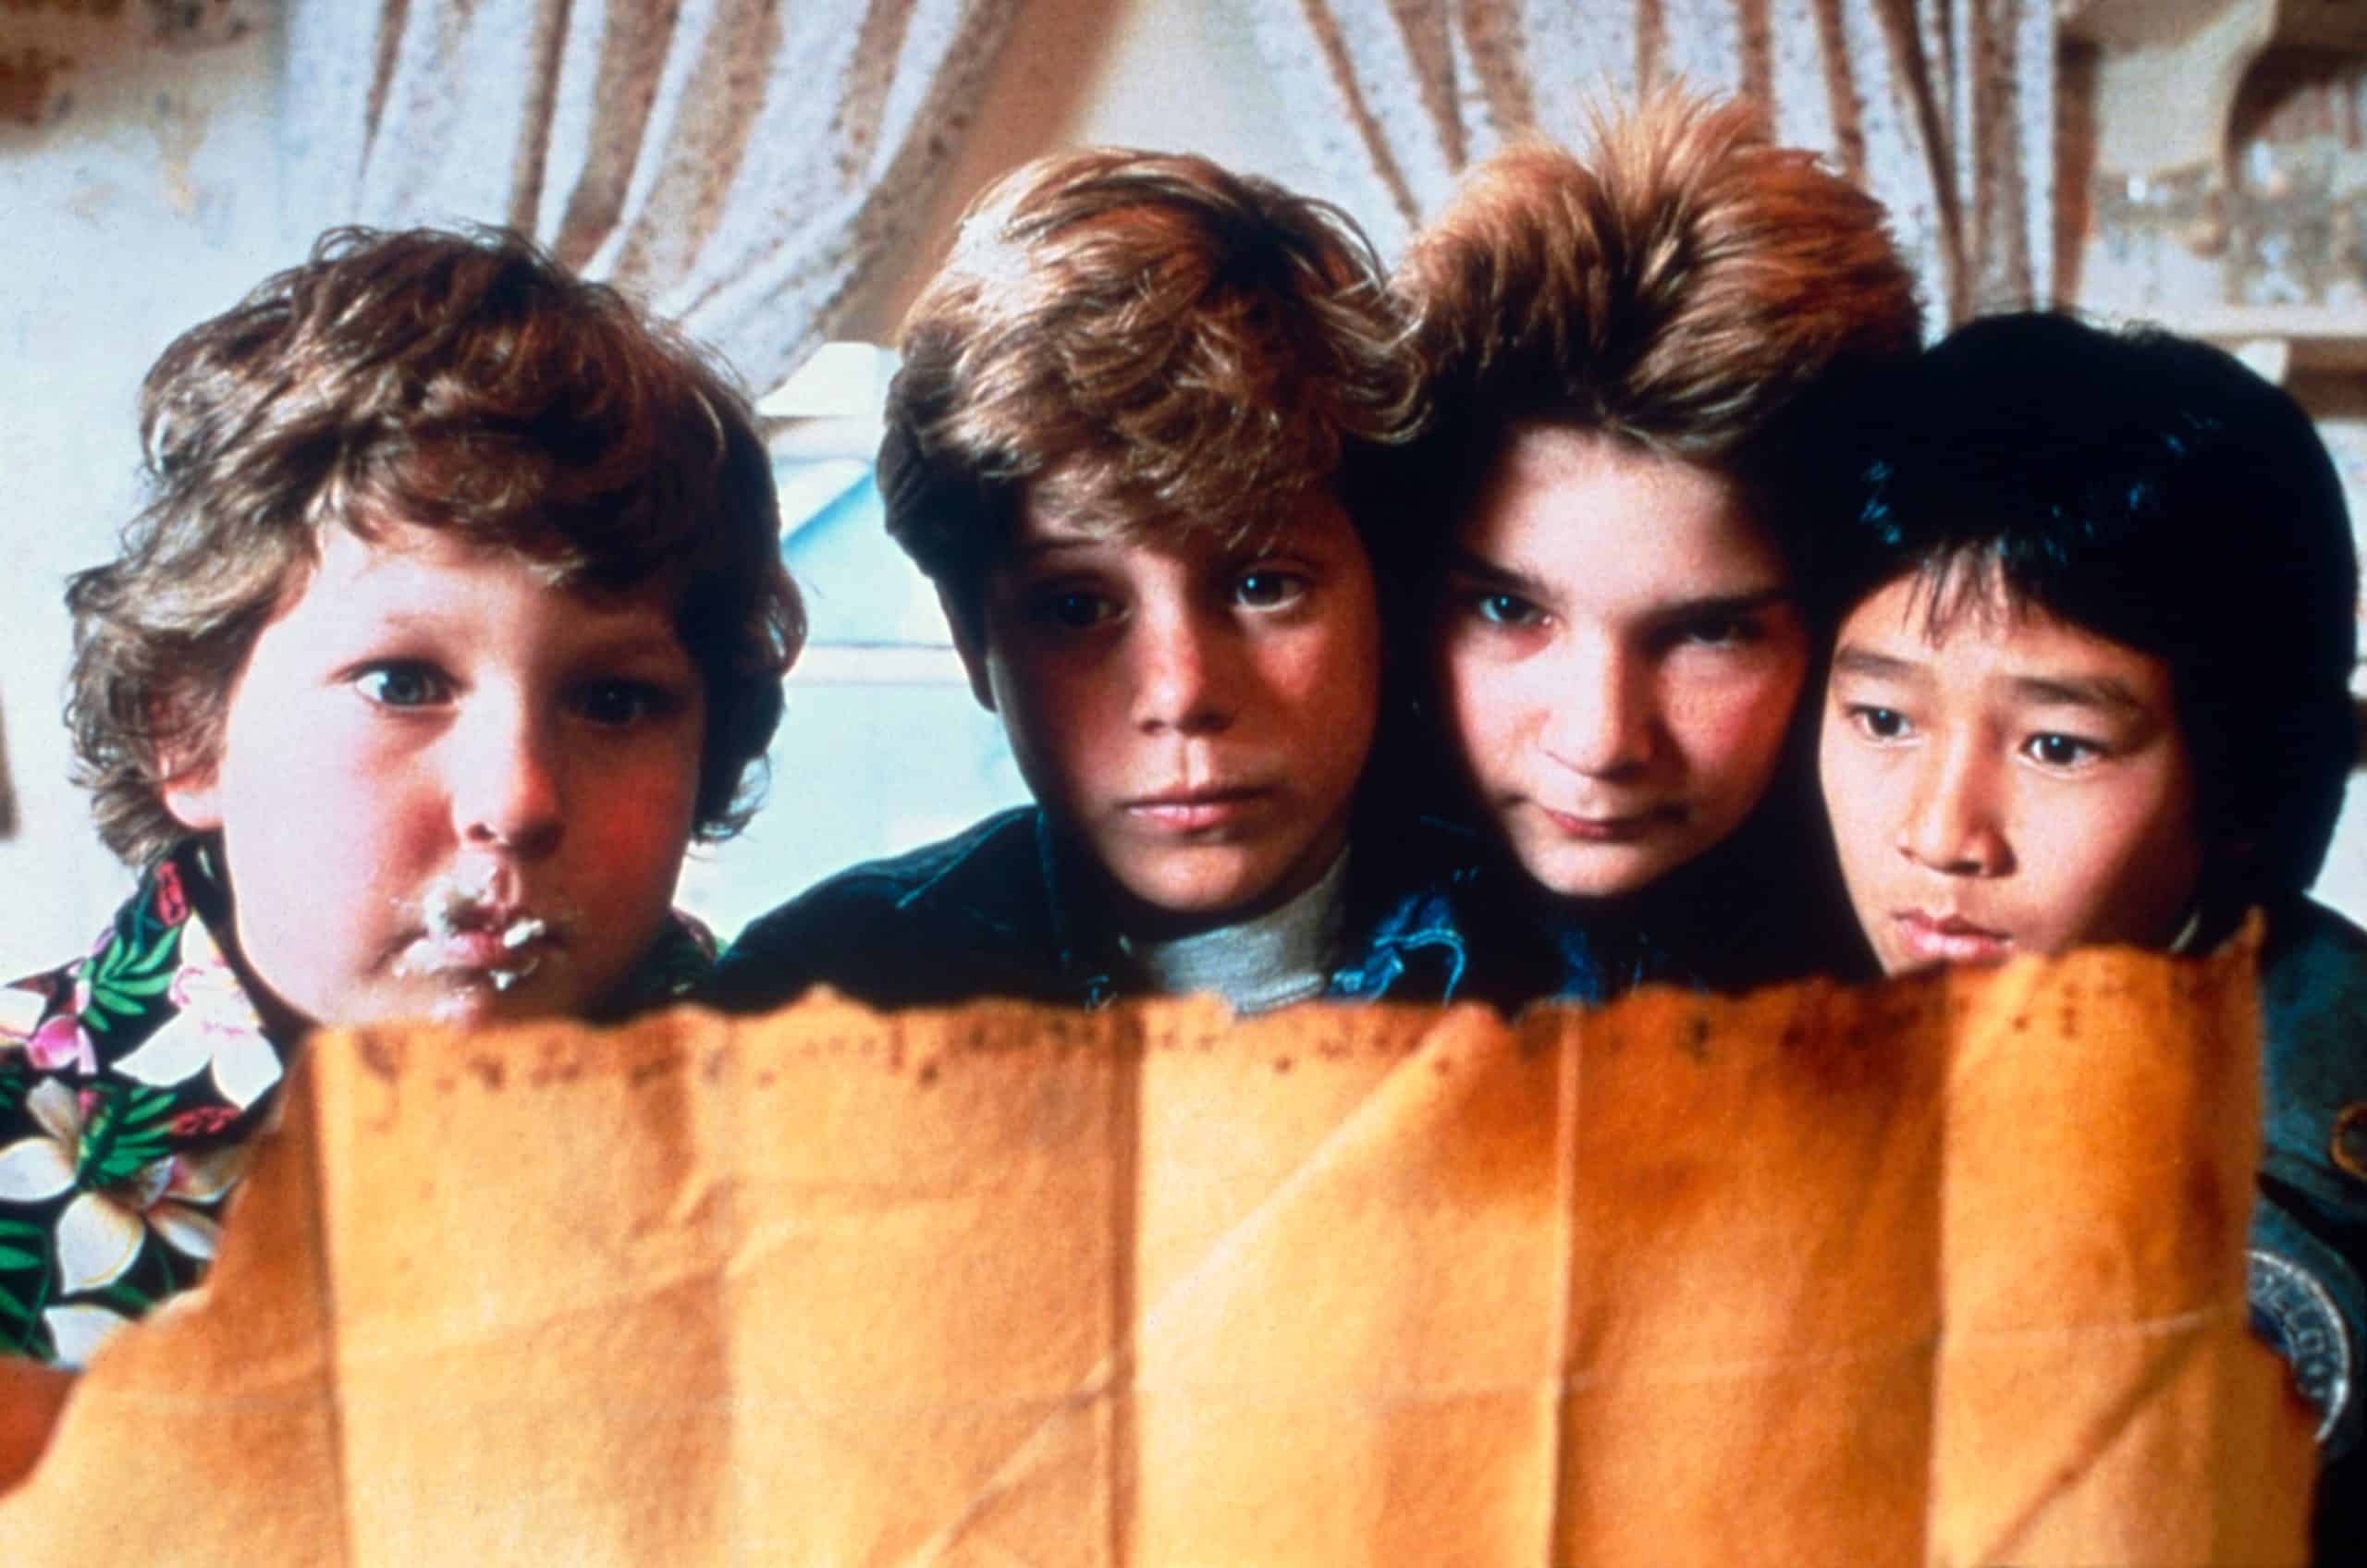 THE GOONIES, from left: Jeff Cohen, Sean Astin, Corey Feldman, Ke Huy Quan (aka Jonathan Ke Quan), 1985